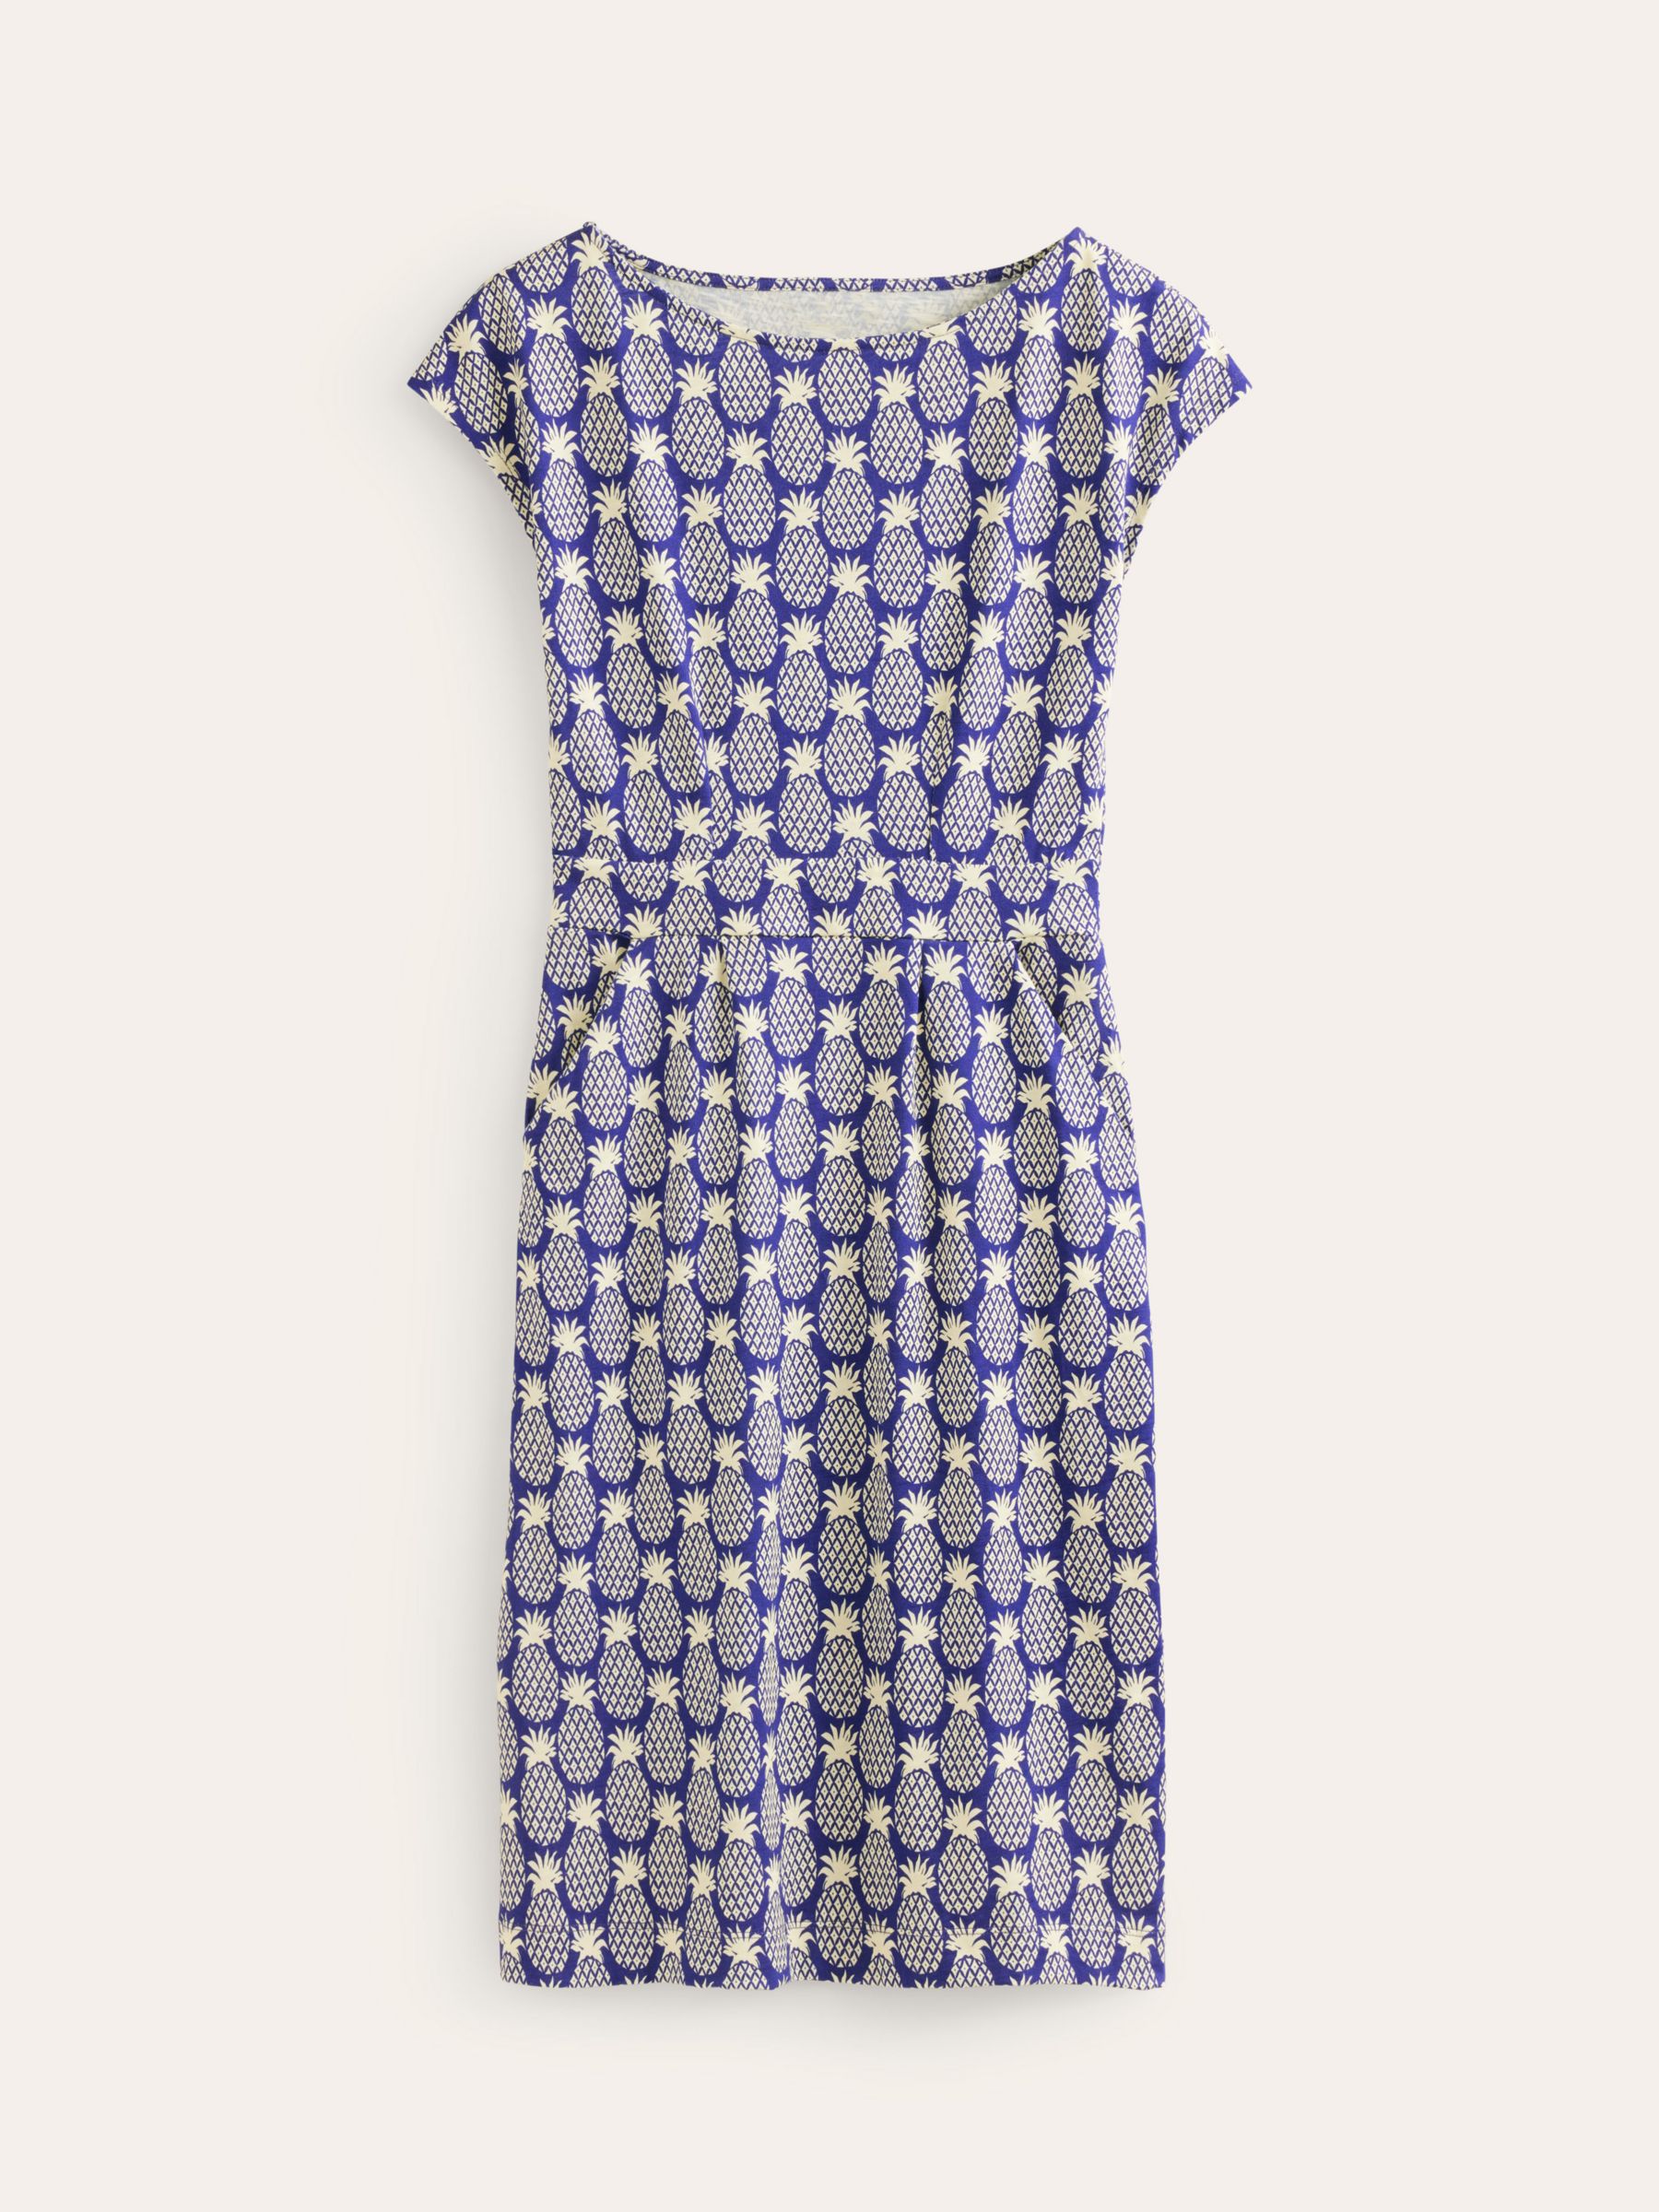 Boden Florrie Geometric Pineapples Jersey Dress, Blue, 8